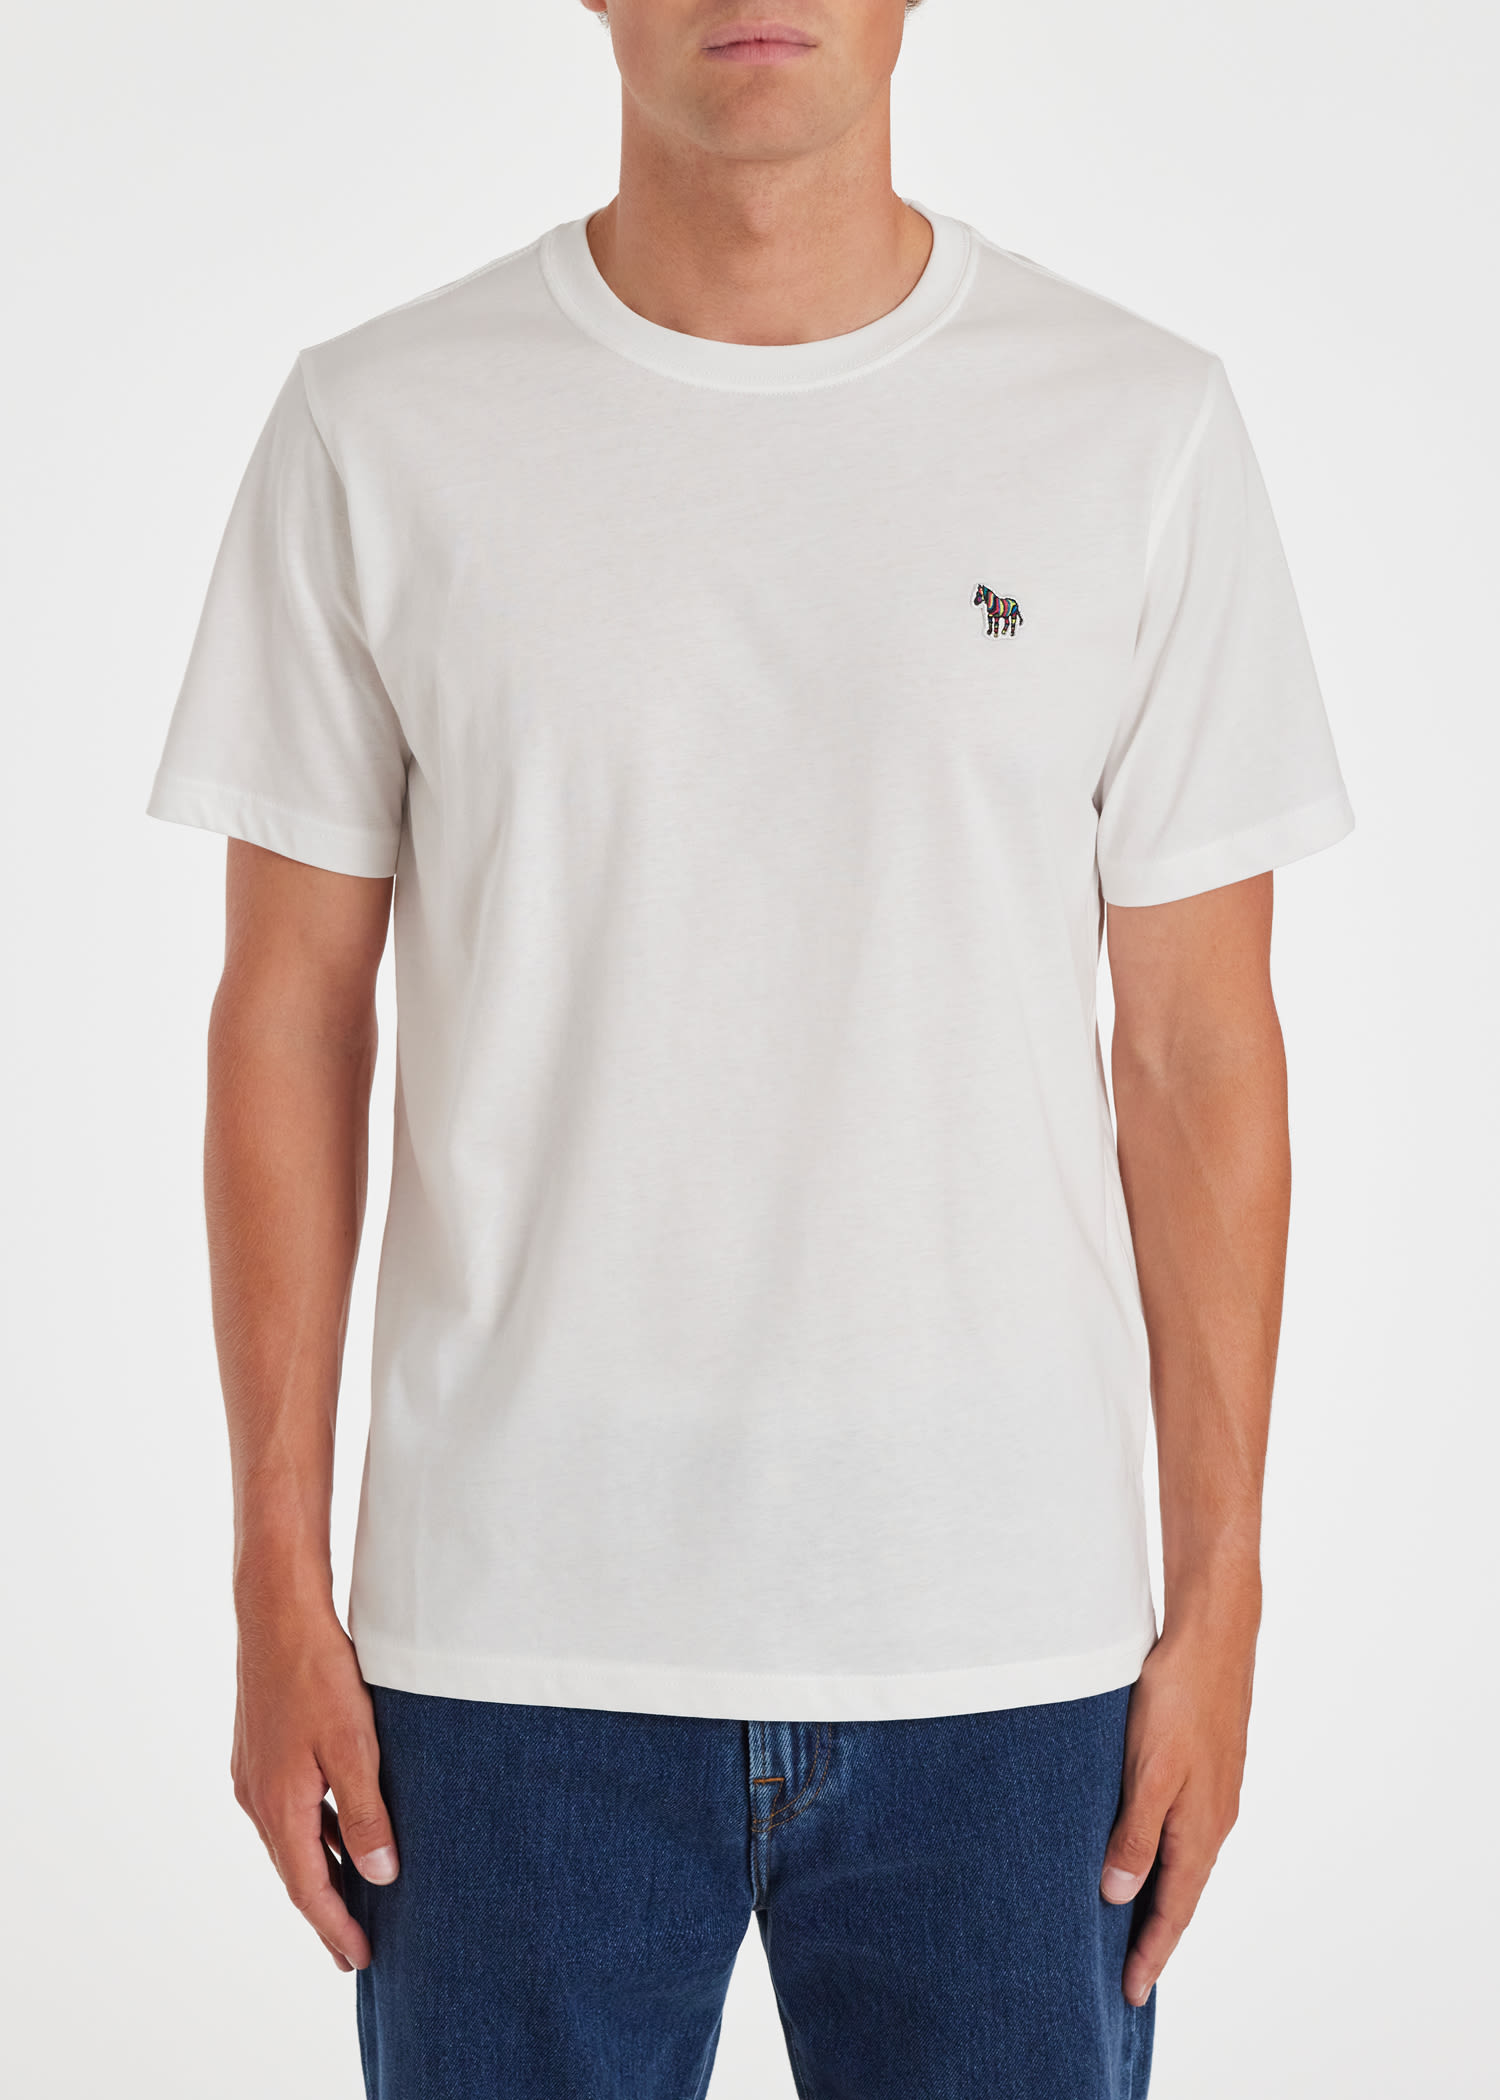 Paul Smith Men's T-Shirt M White 100% Cotton